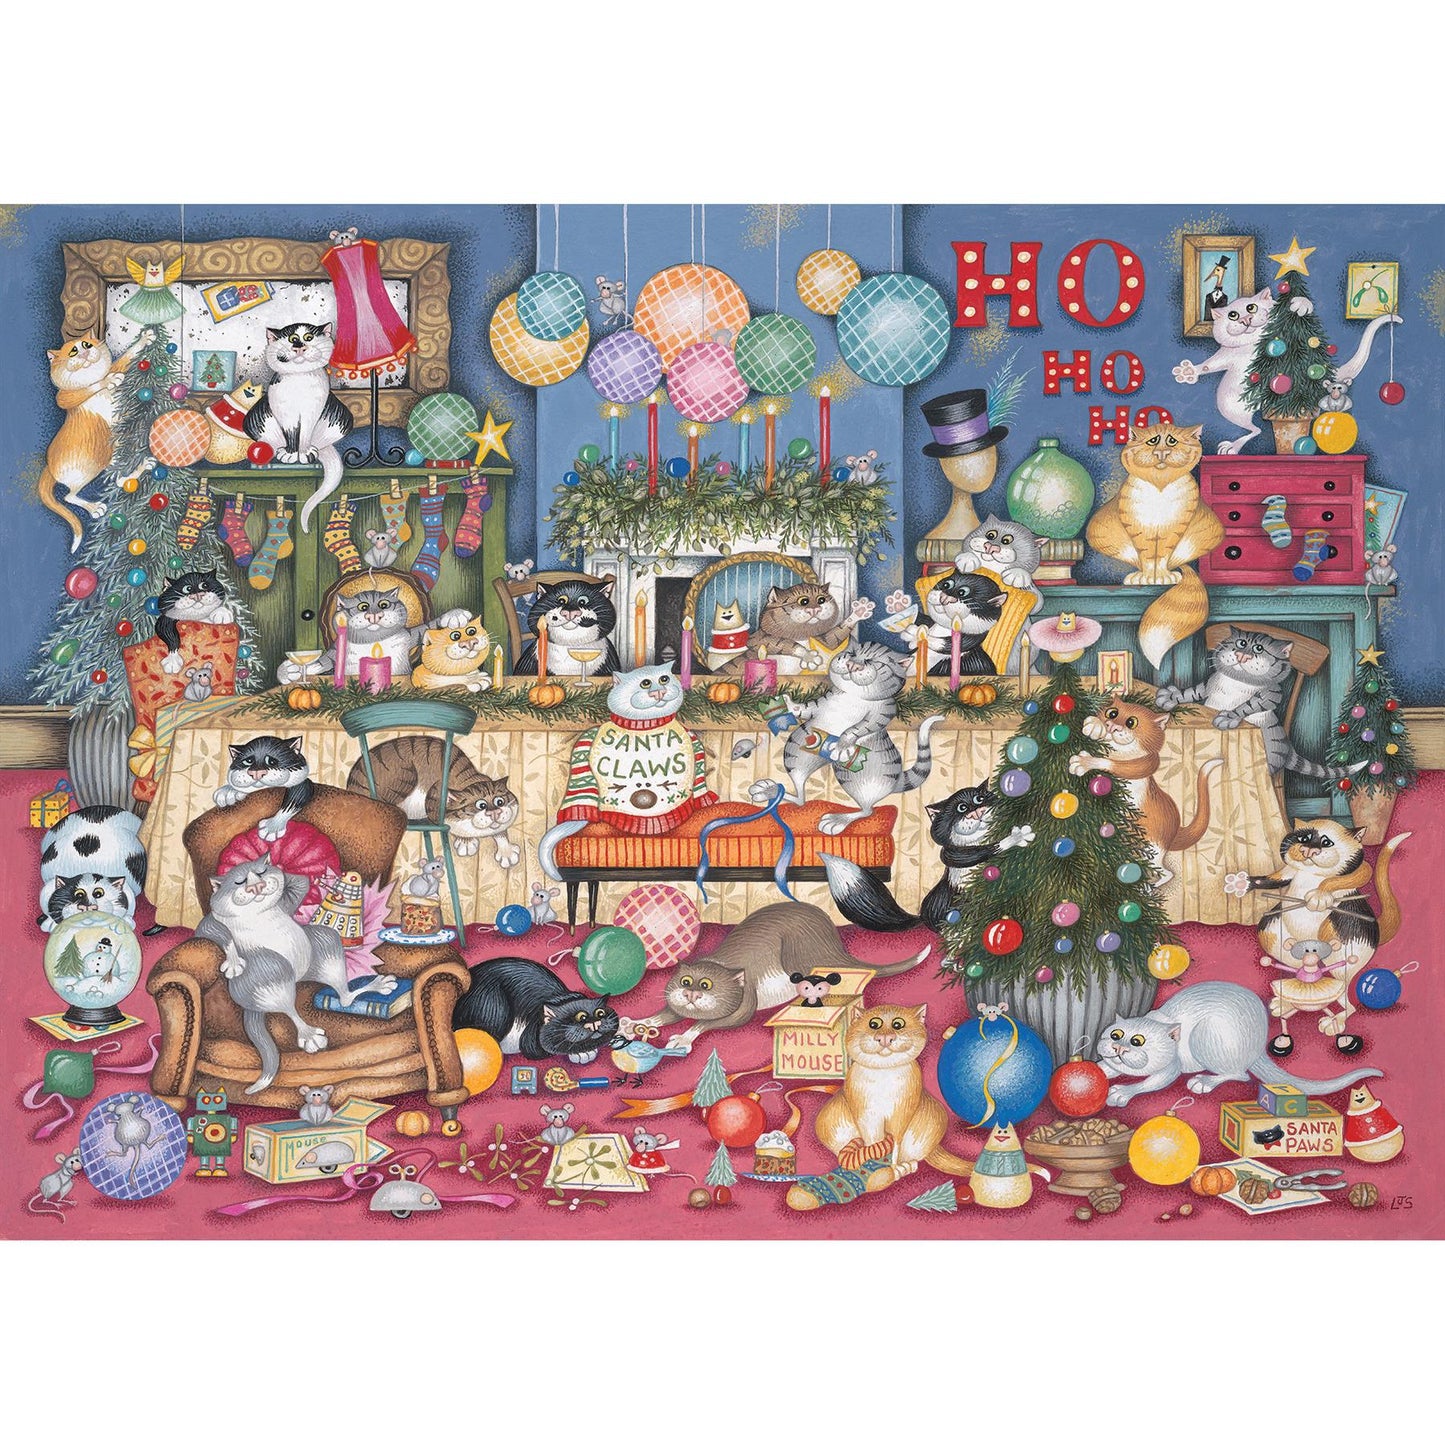 Feline Festivities 1000 Piece Jigsaw Puzzle